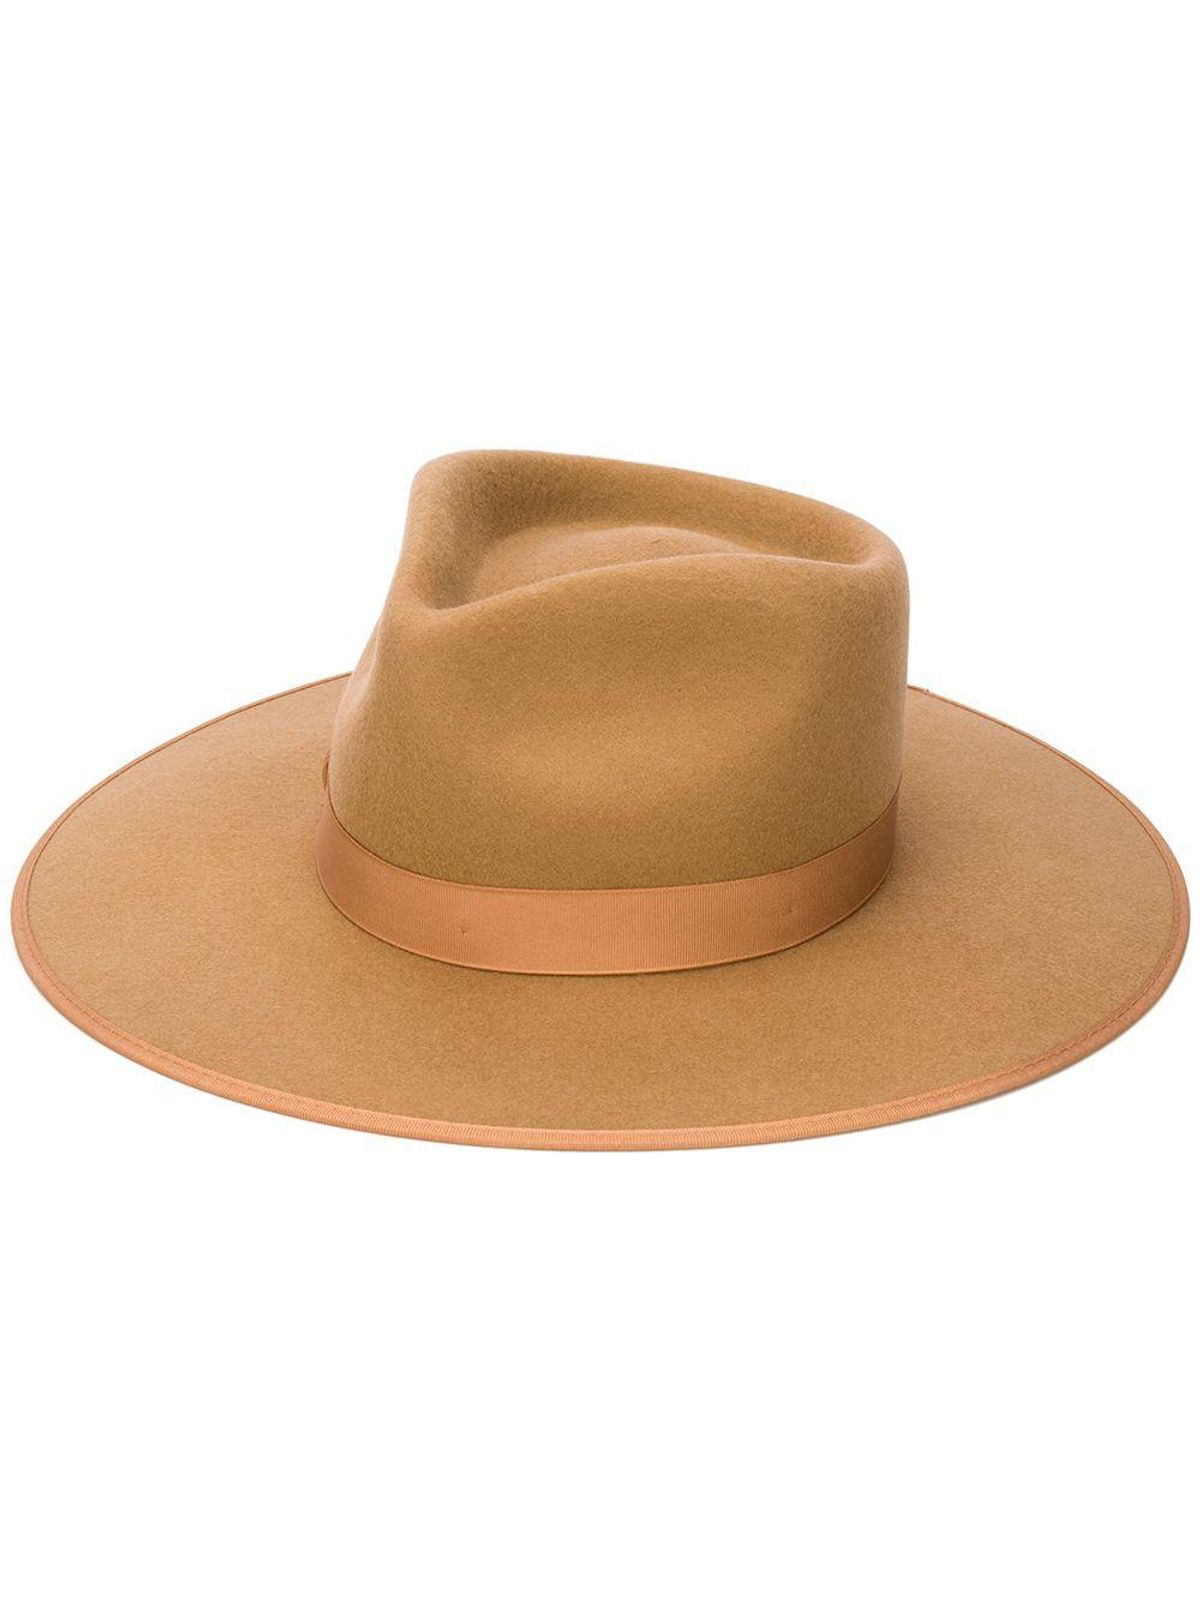 Rancher Fedora Hat